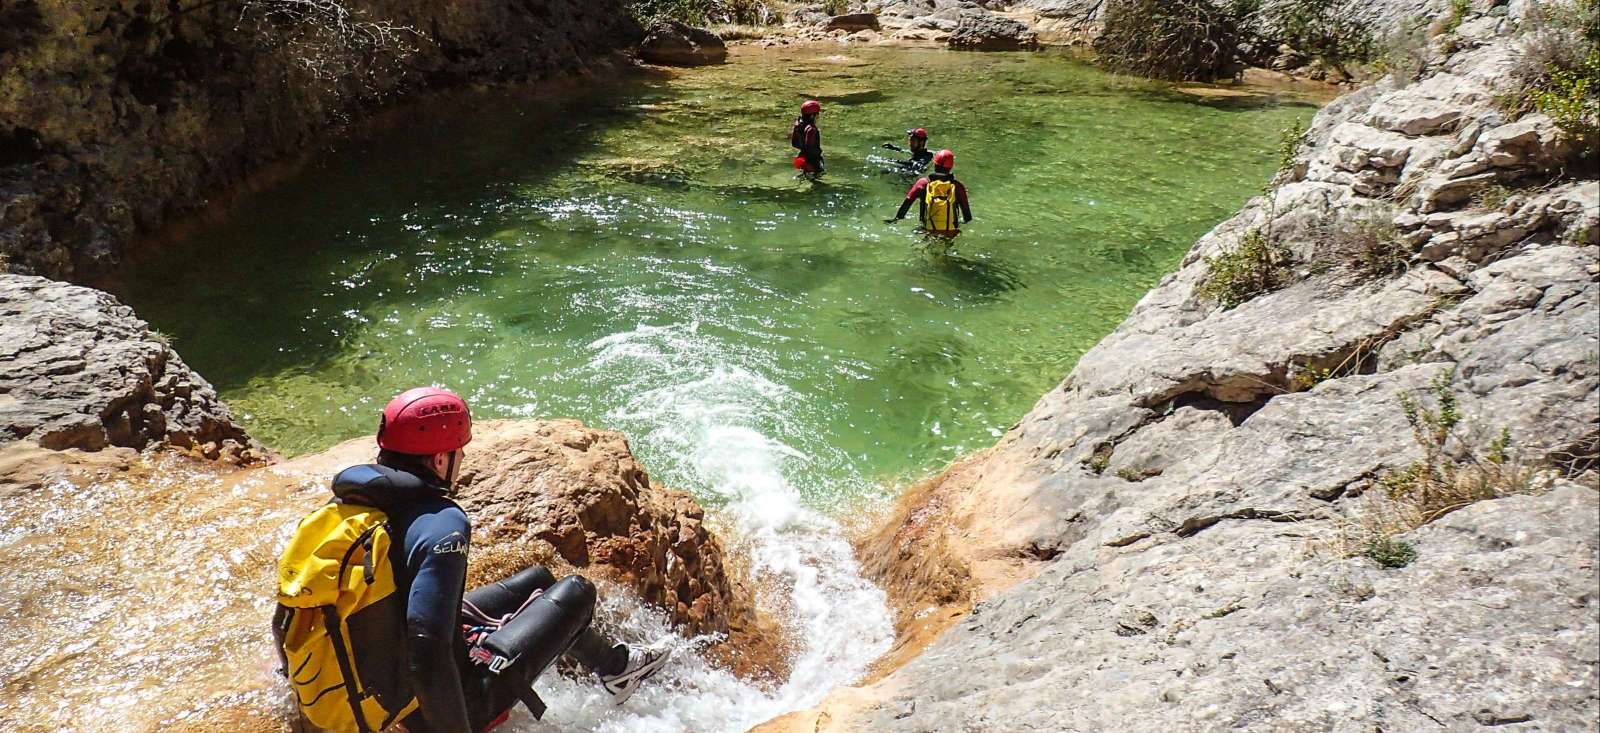 Voyage canyoning - Canyoning en Sierra de Guara, version camping